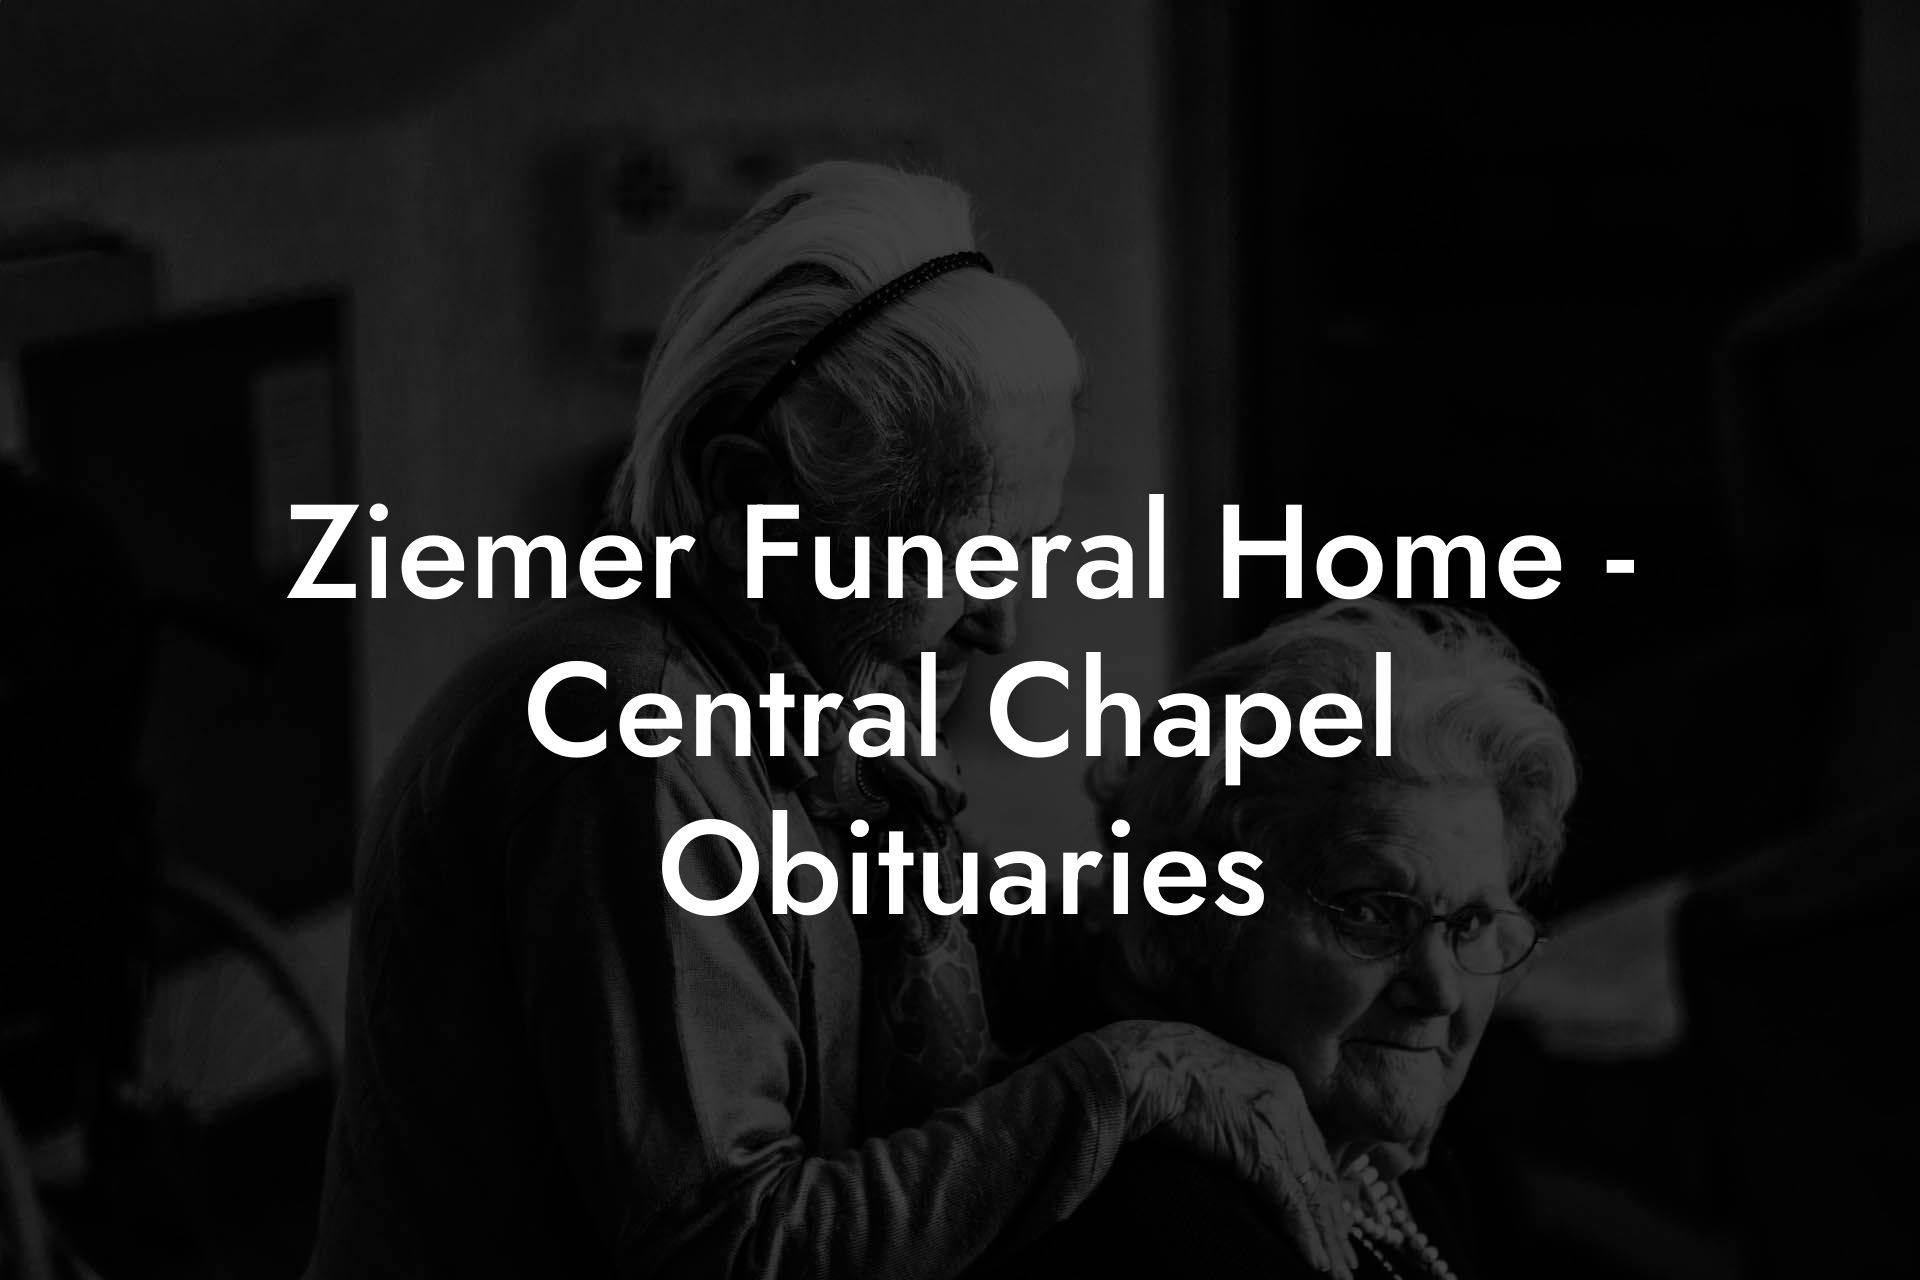 Ziemer Funeral Home - Central Chapel Obituaries